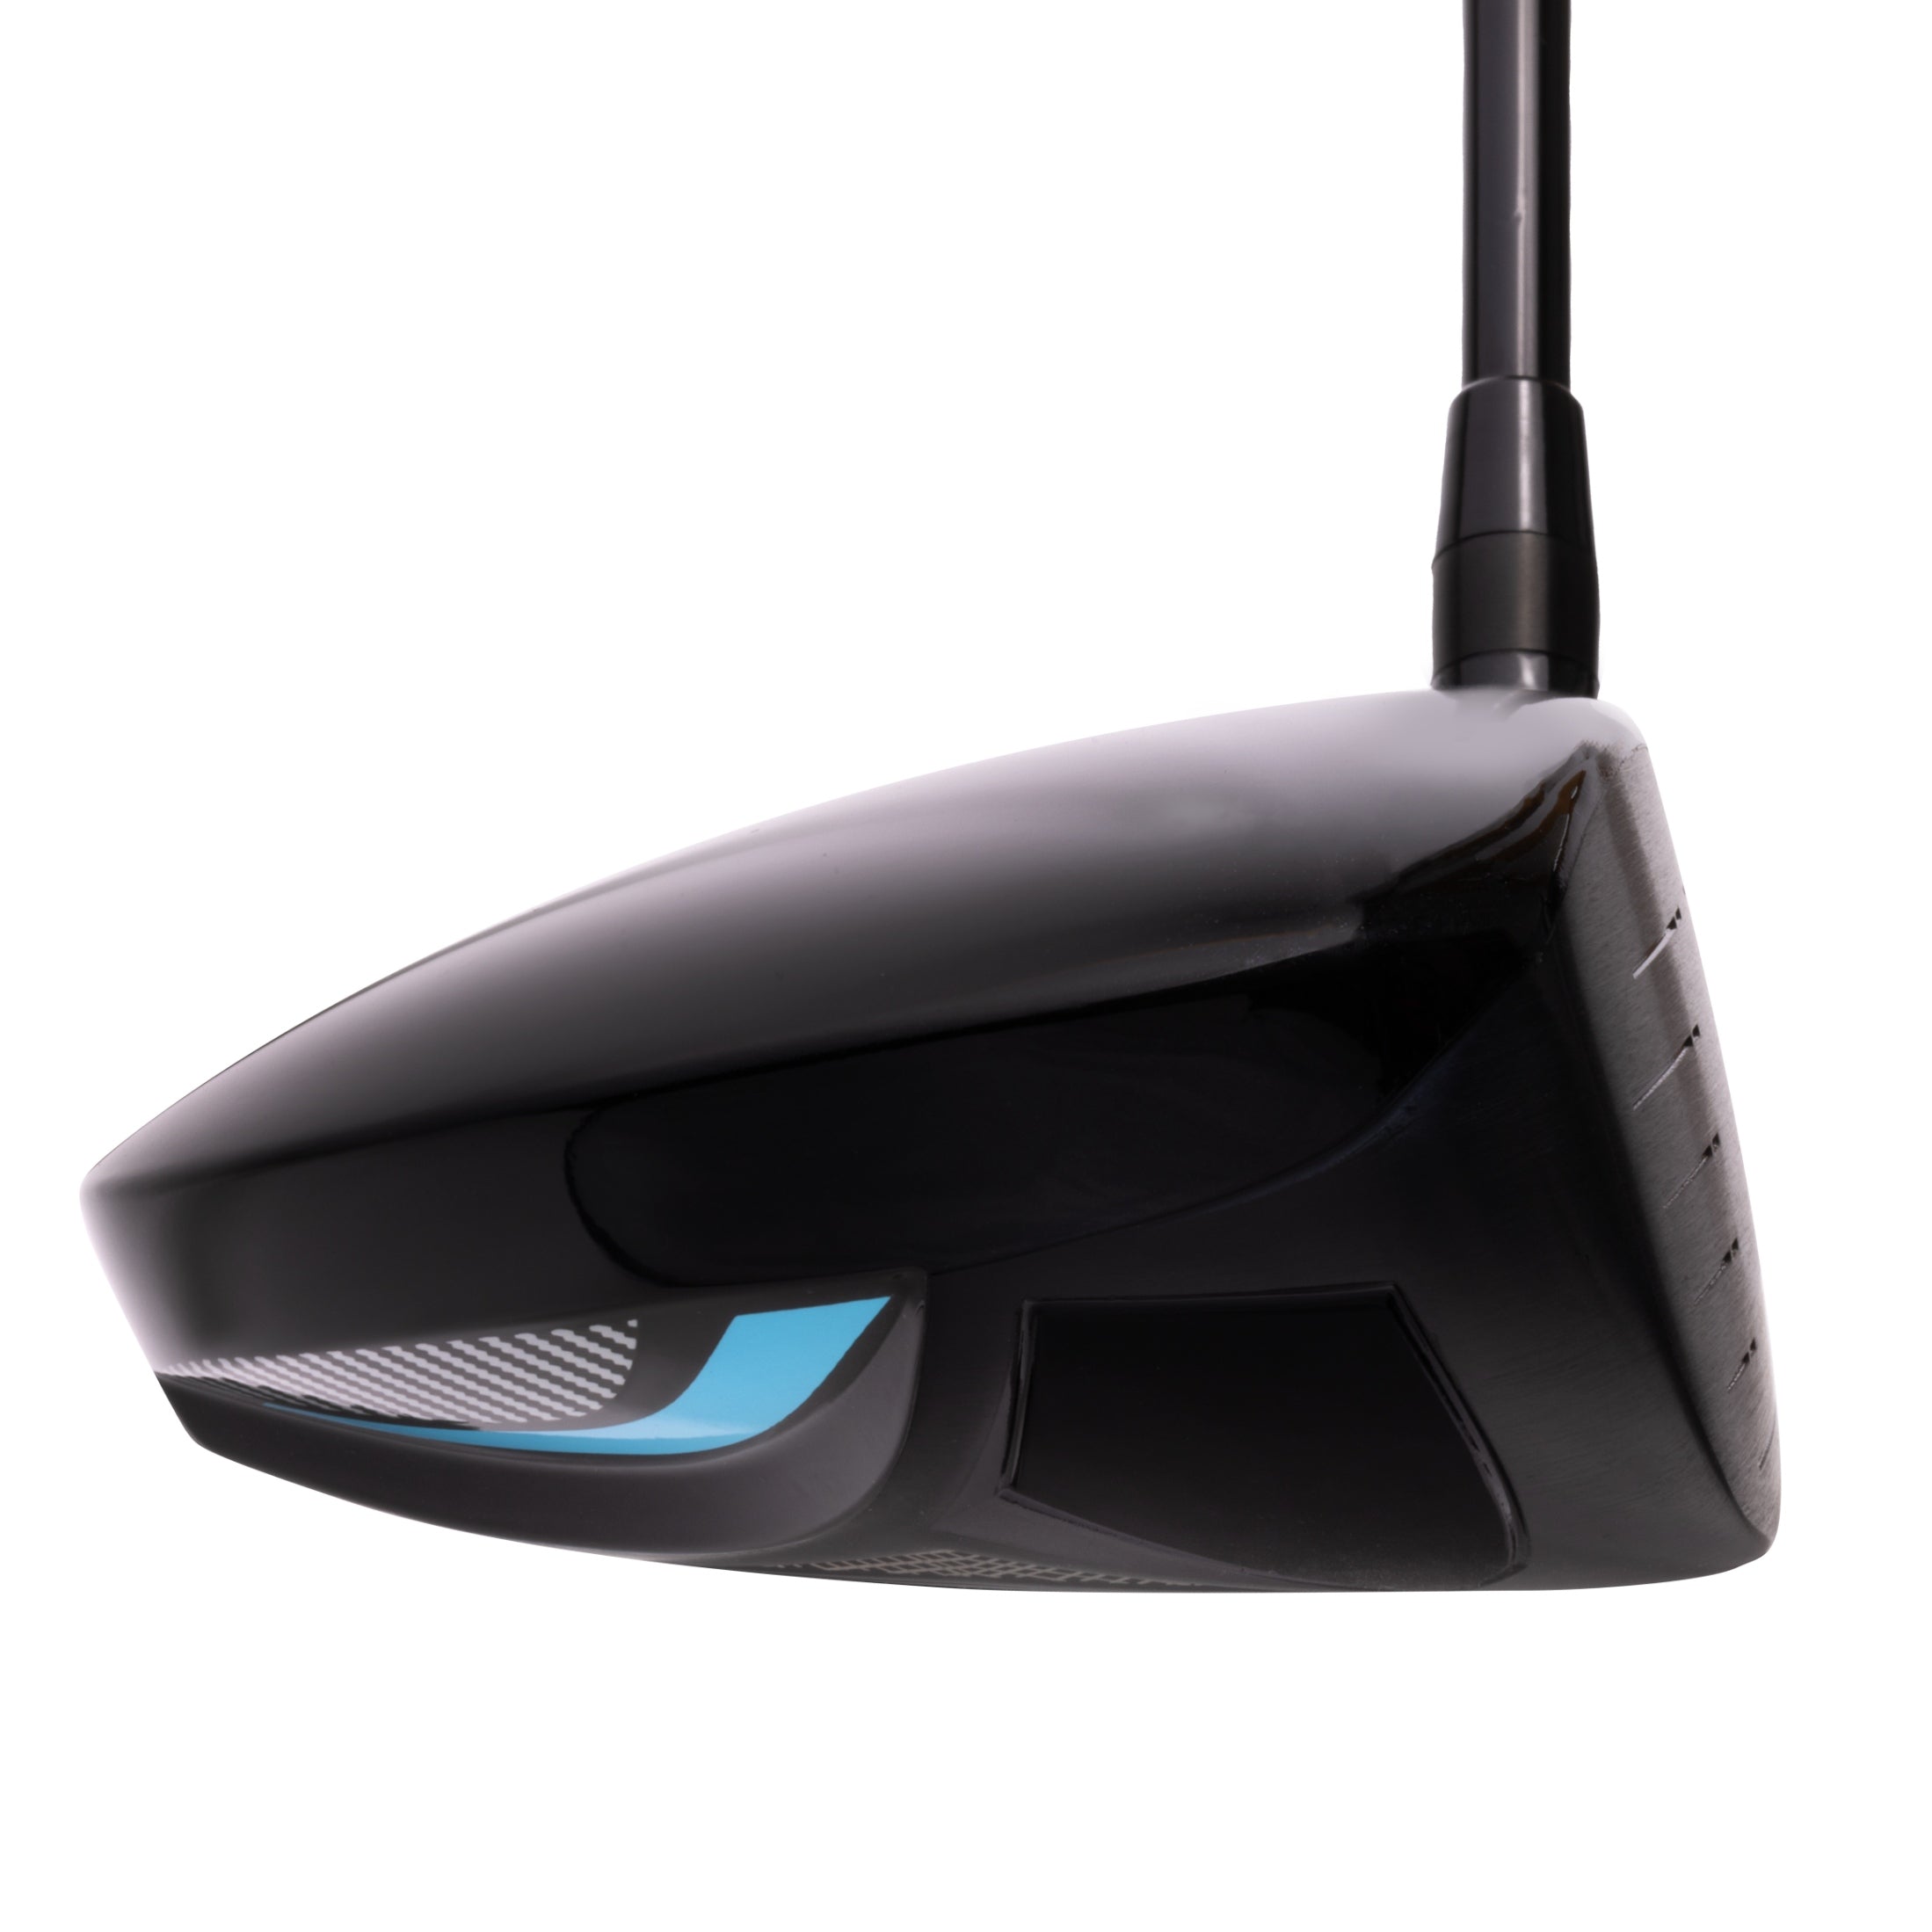 Lazrus Golf 13 pc Set - Driver, 3 Wedges Set, Irons (4-PW), Putter & Bag (optional)